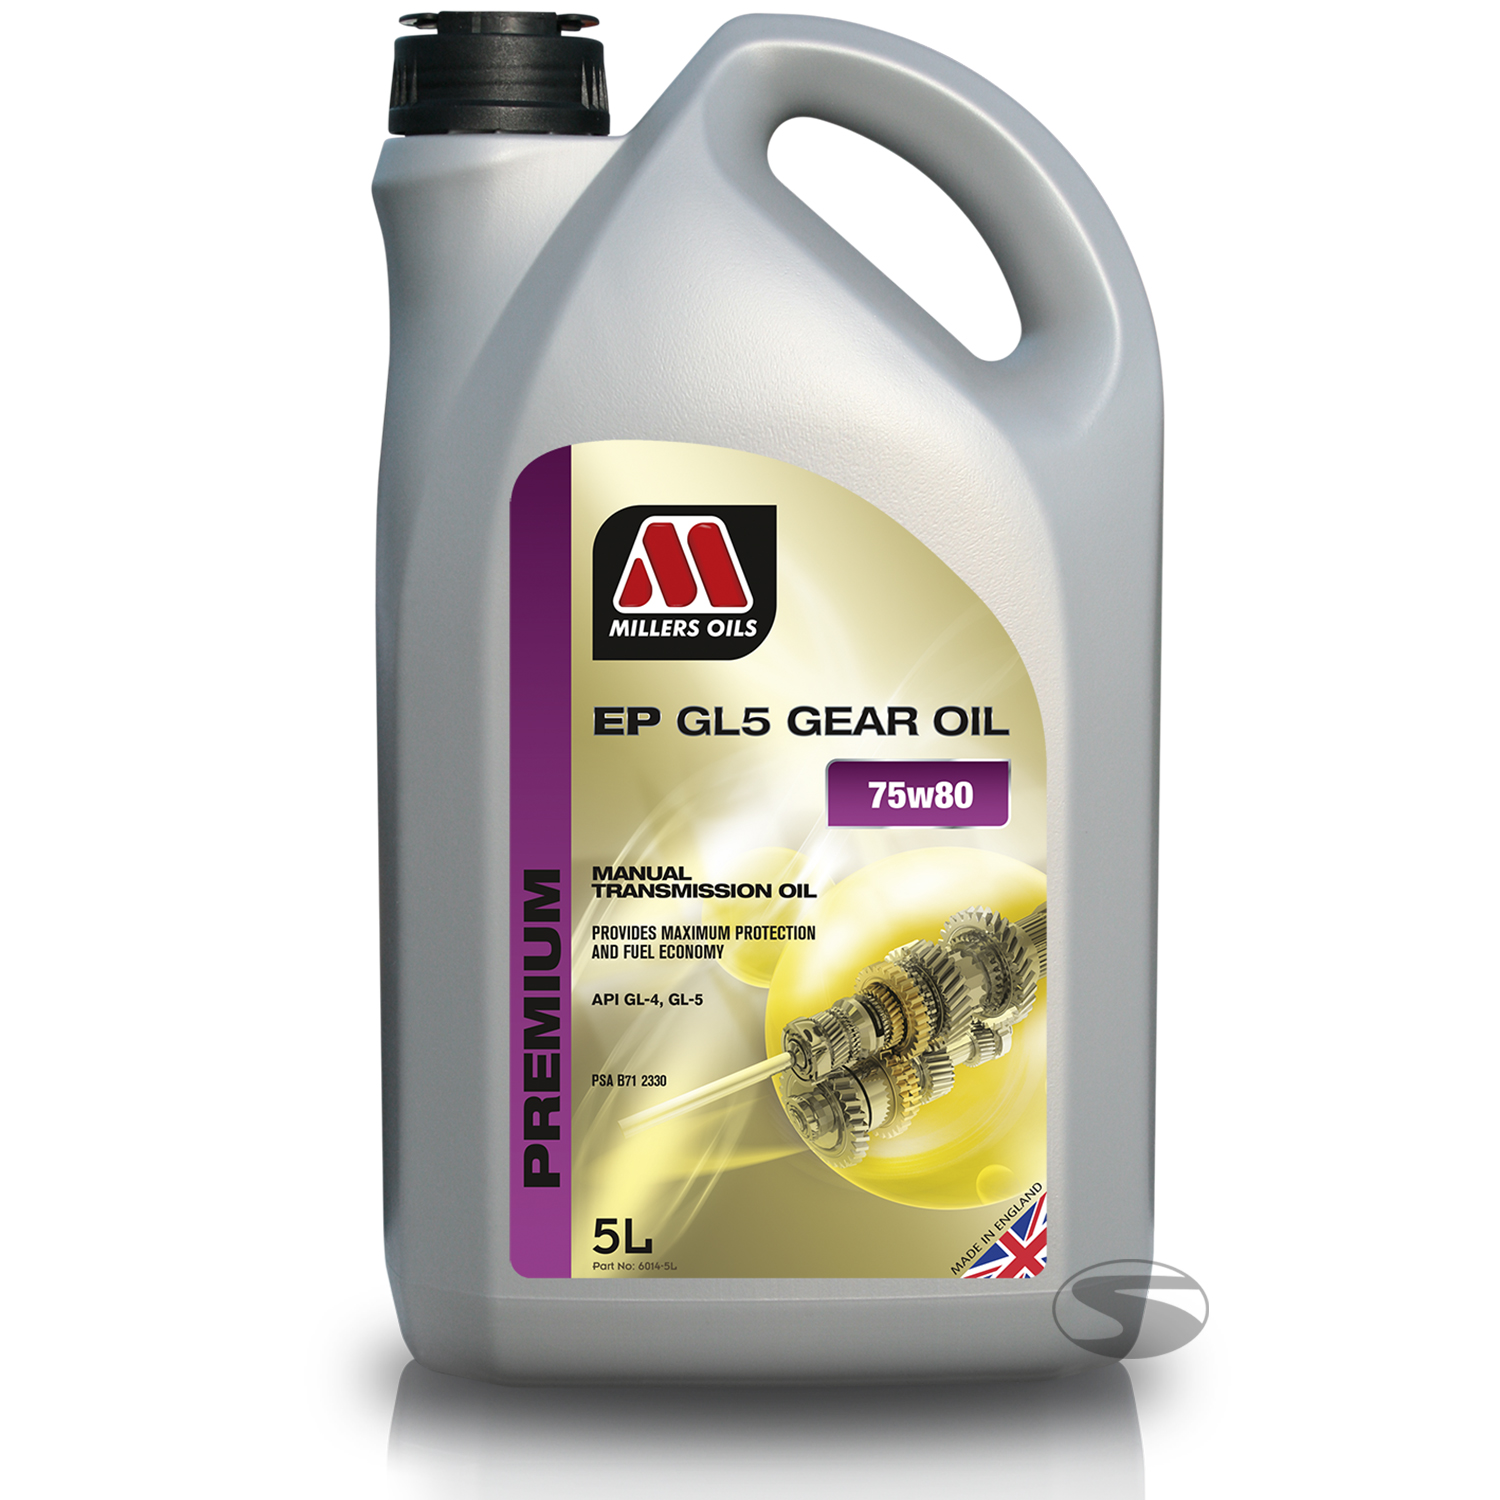 Millers Oils EP 75W-80 GL5, 5 Liter